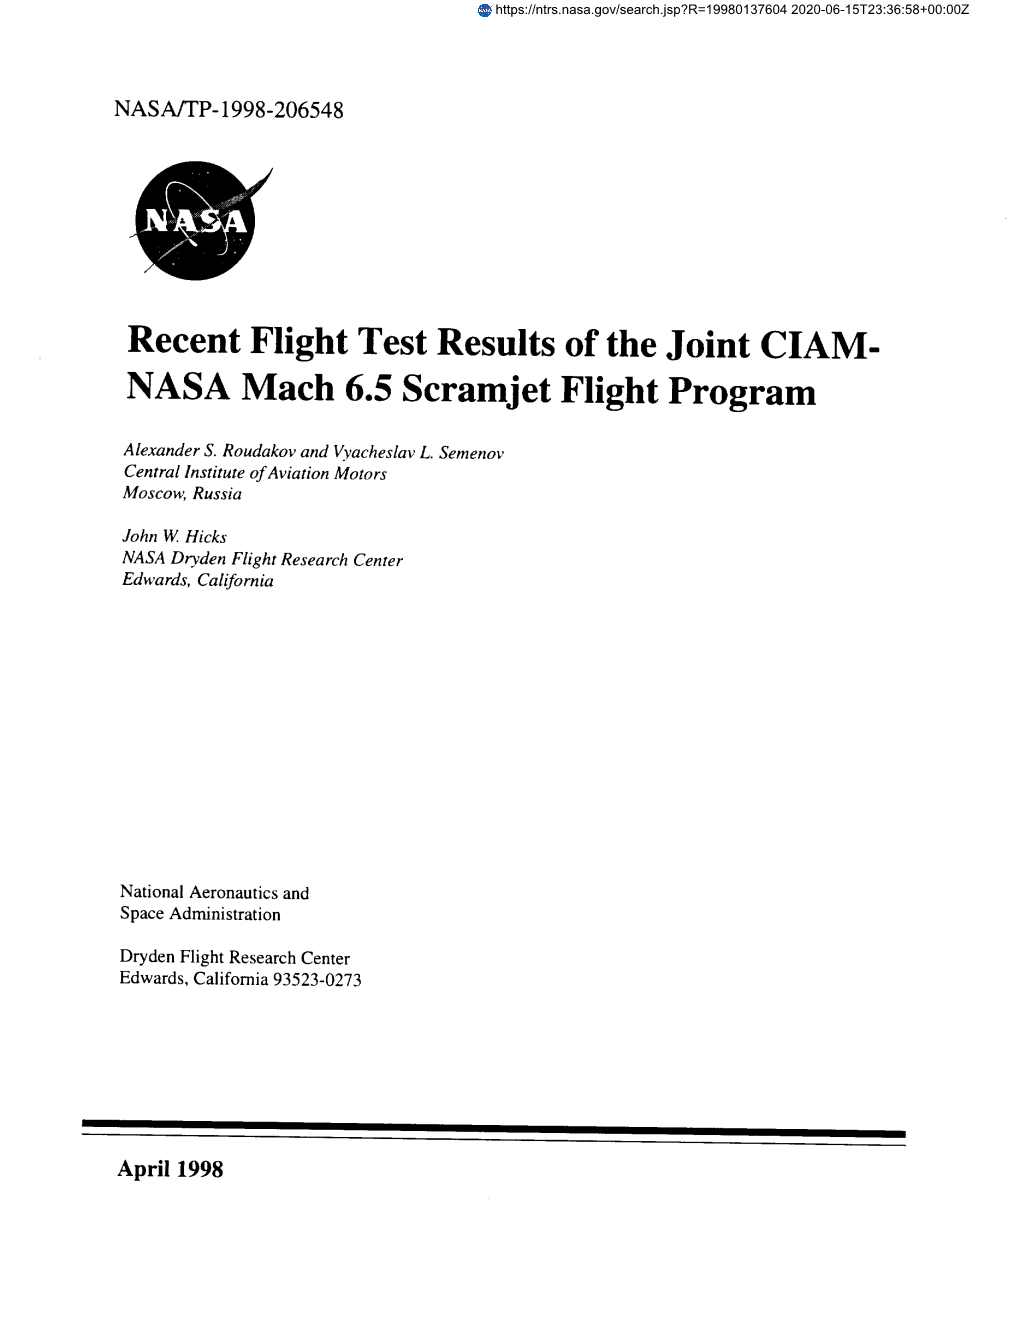 Recent Flight Test Results of the Joint CIAM- NASA Mach 6.5 Scramjet Flight Program